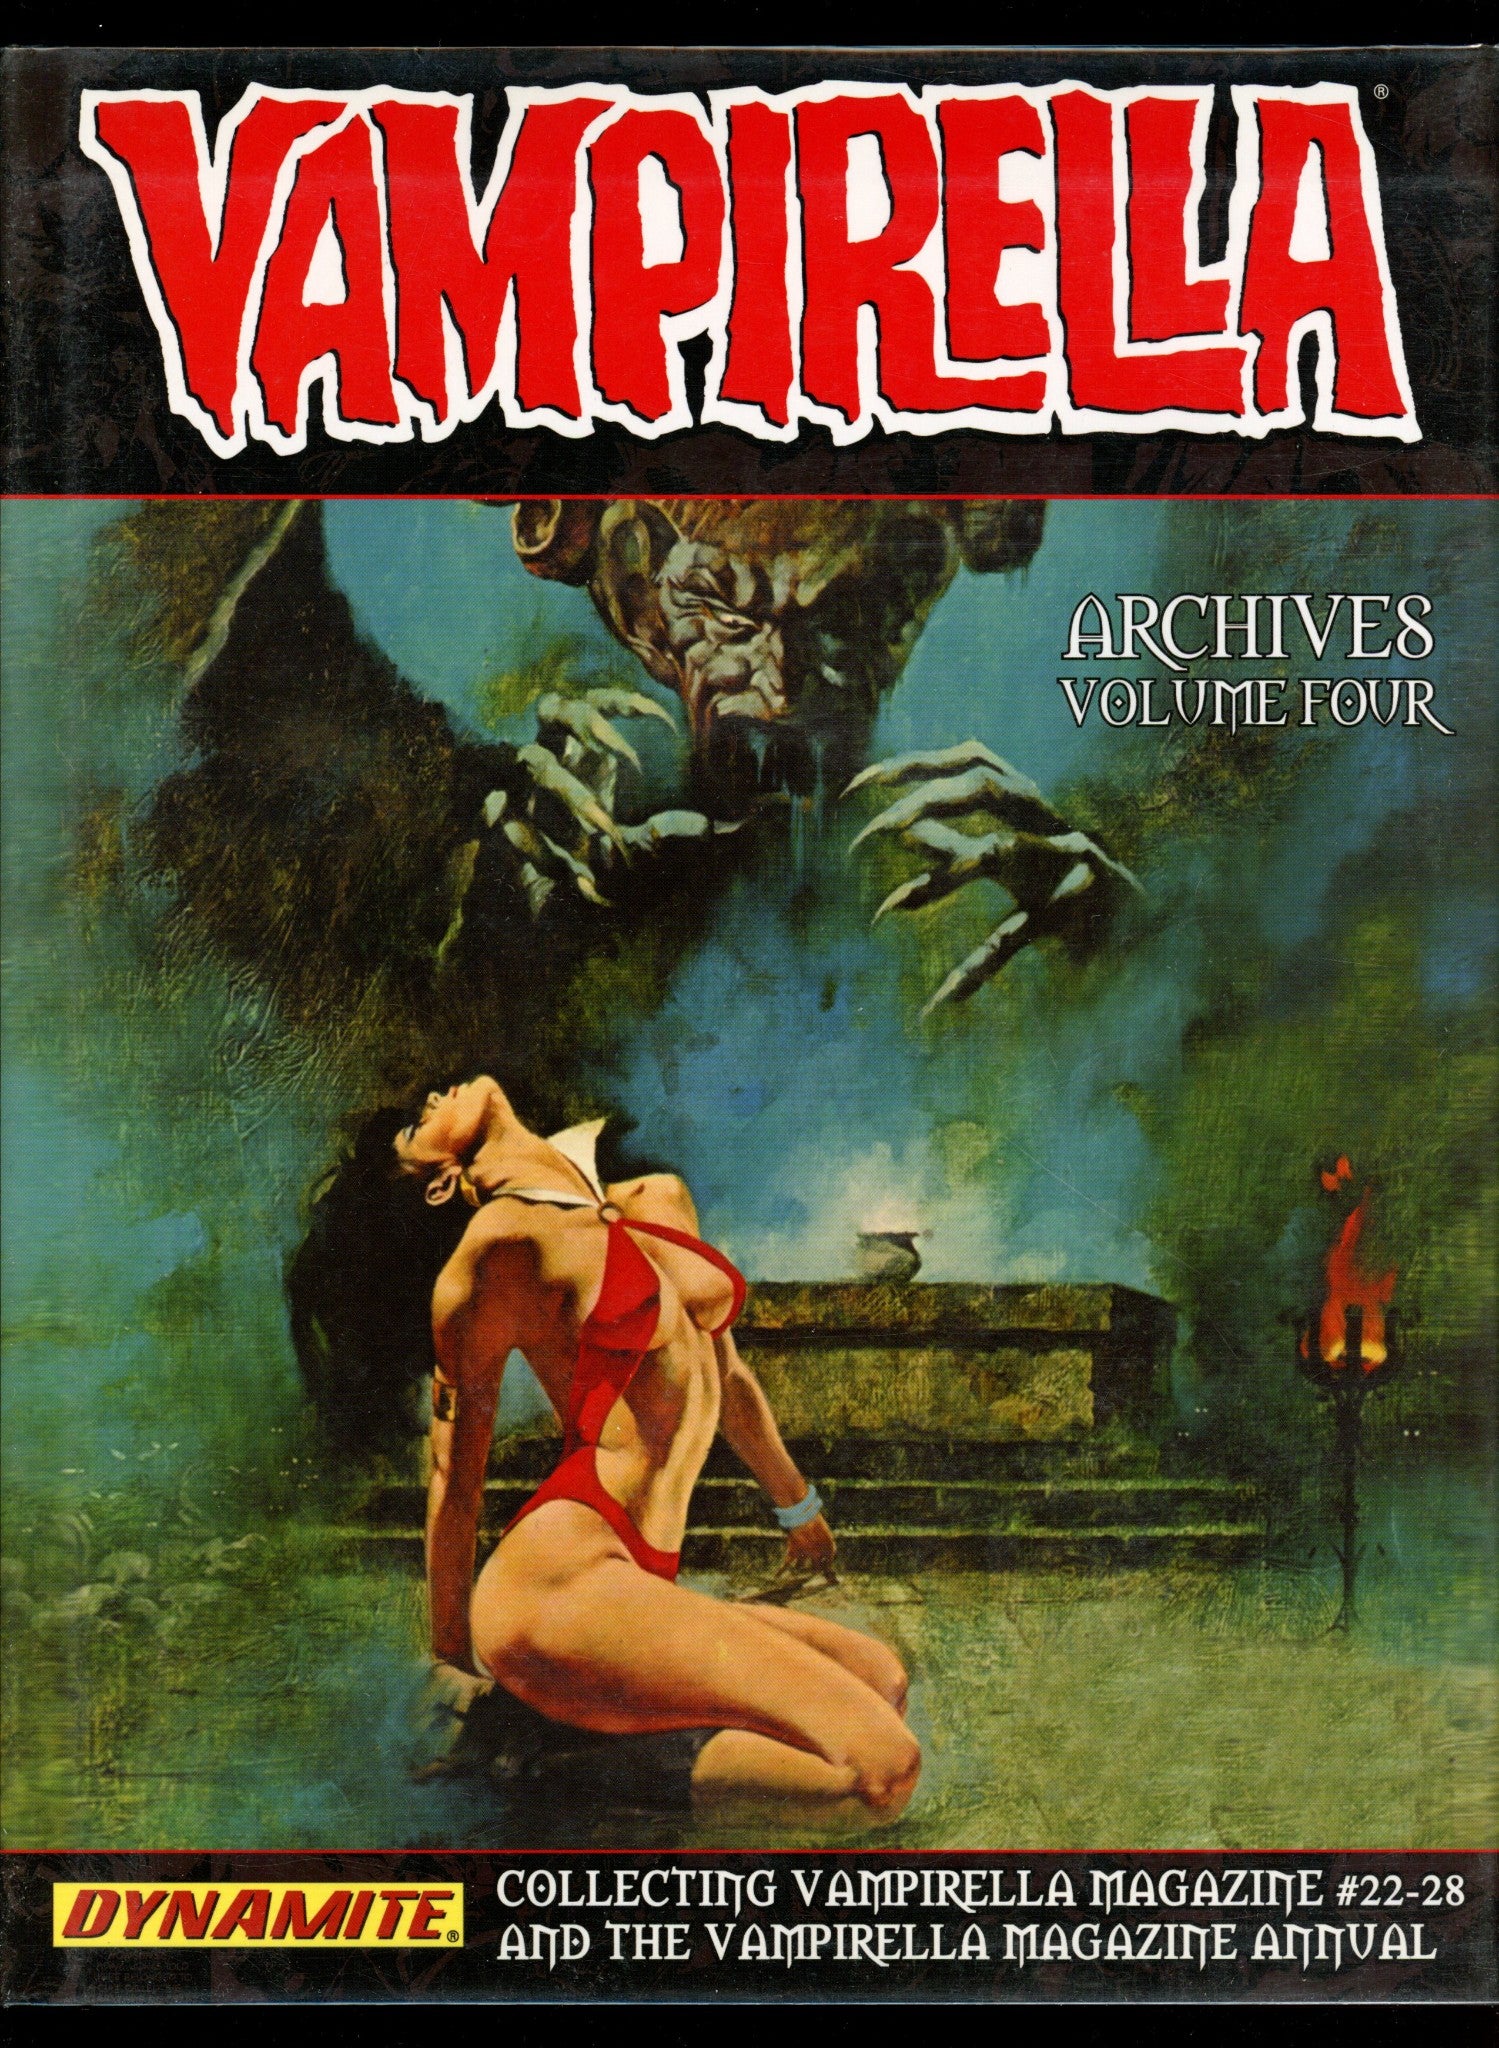 Vampirella Archives HC Vol 4 High Grade w/ Dustcover Jacket () 